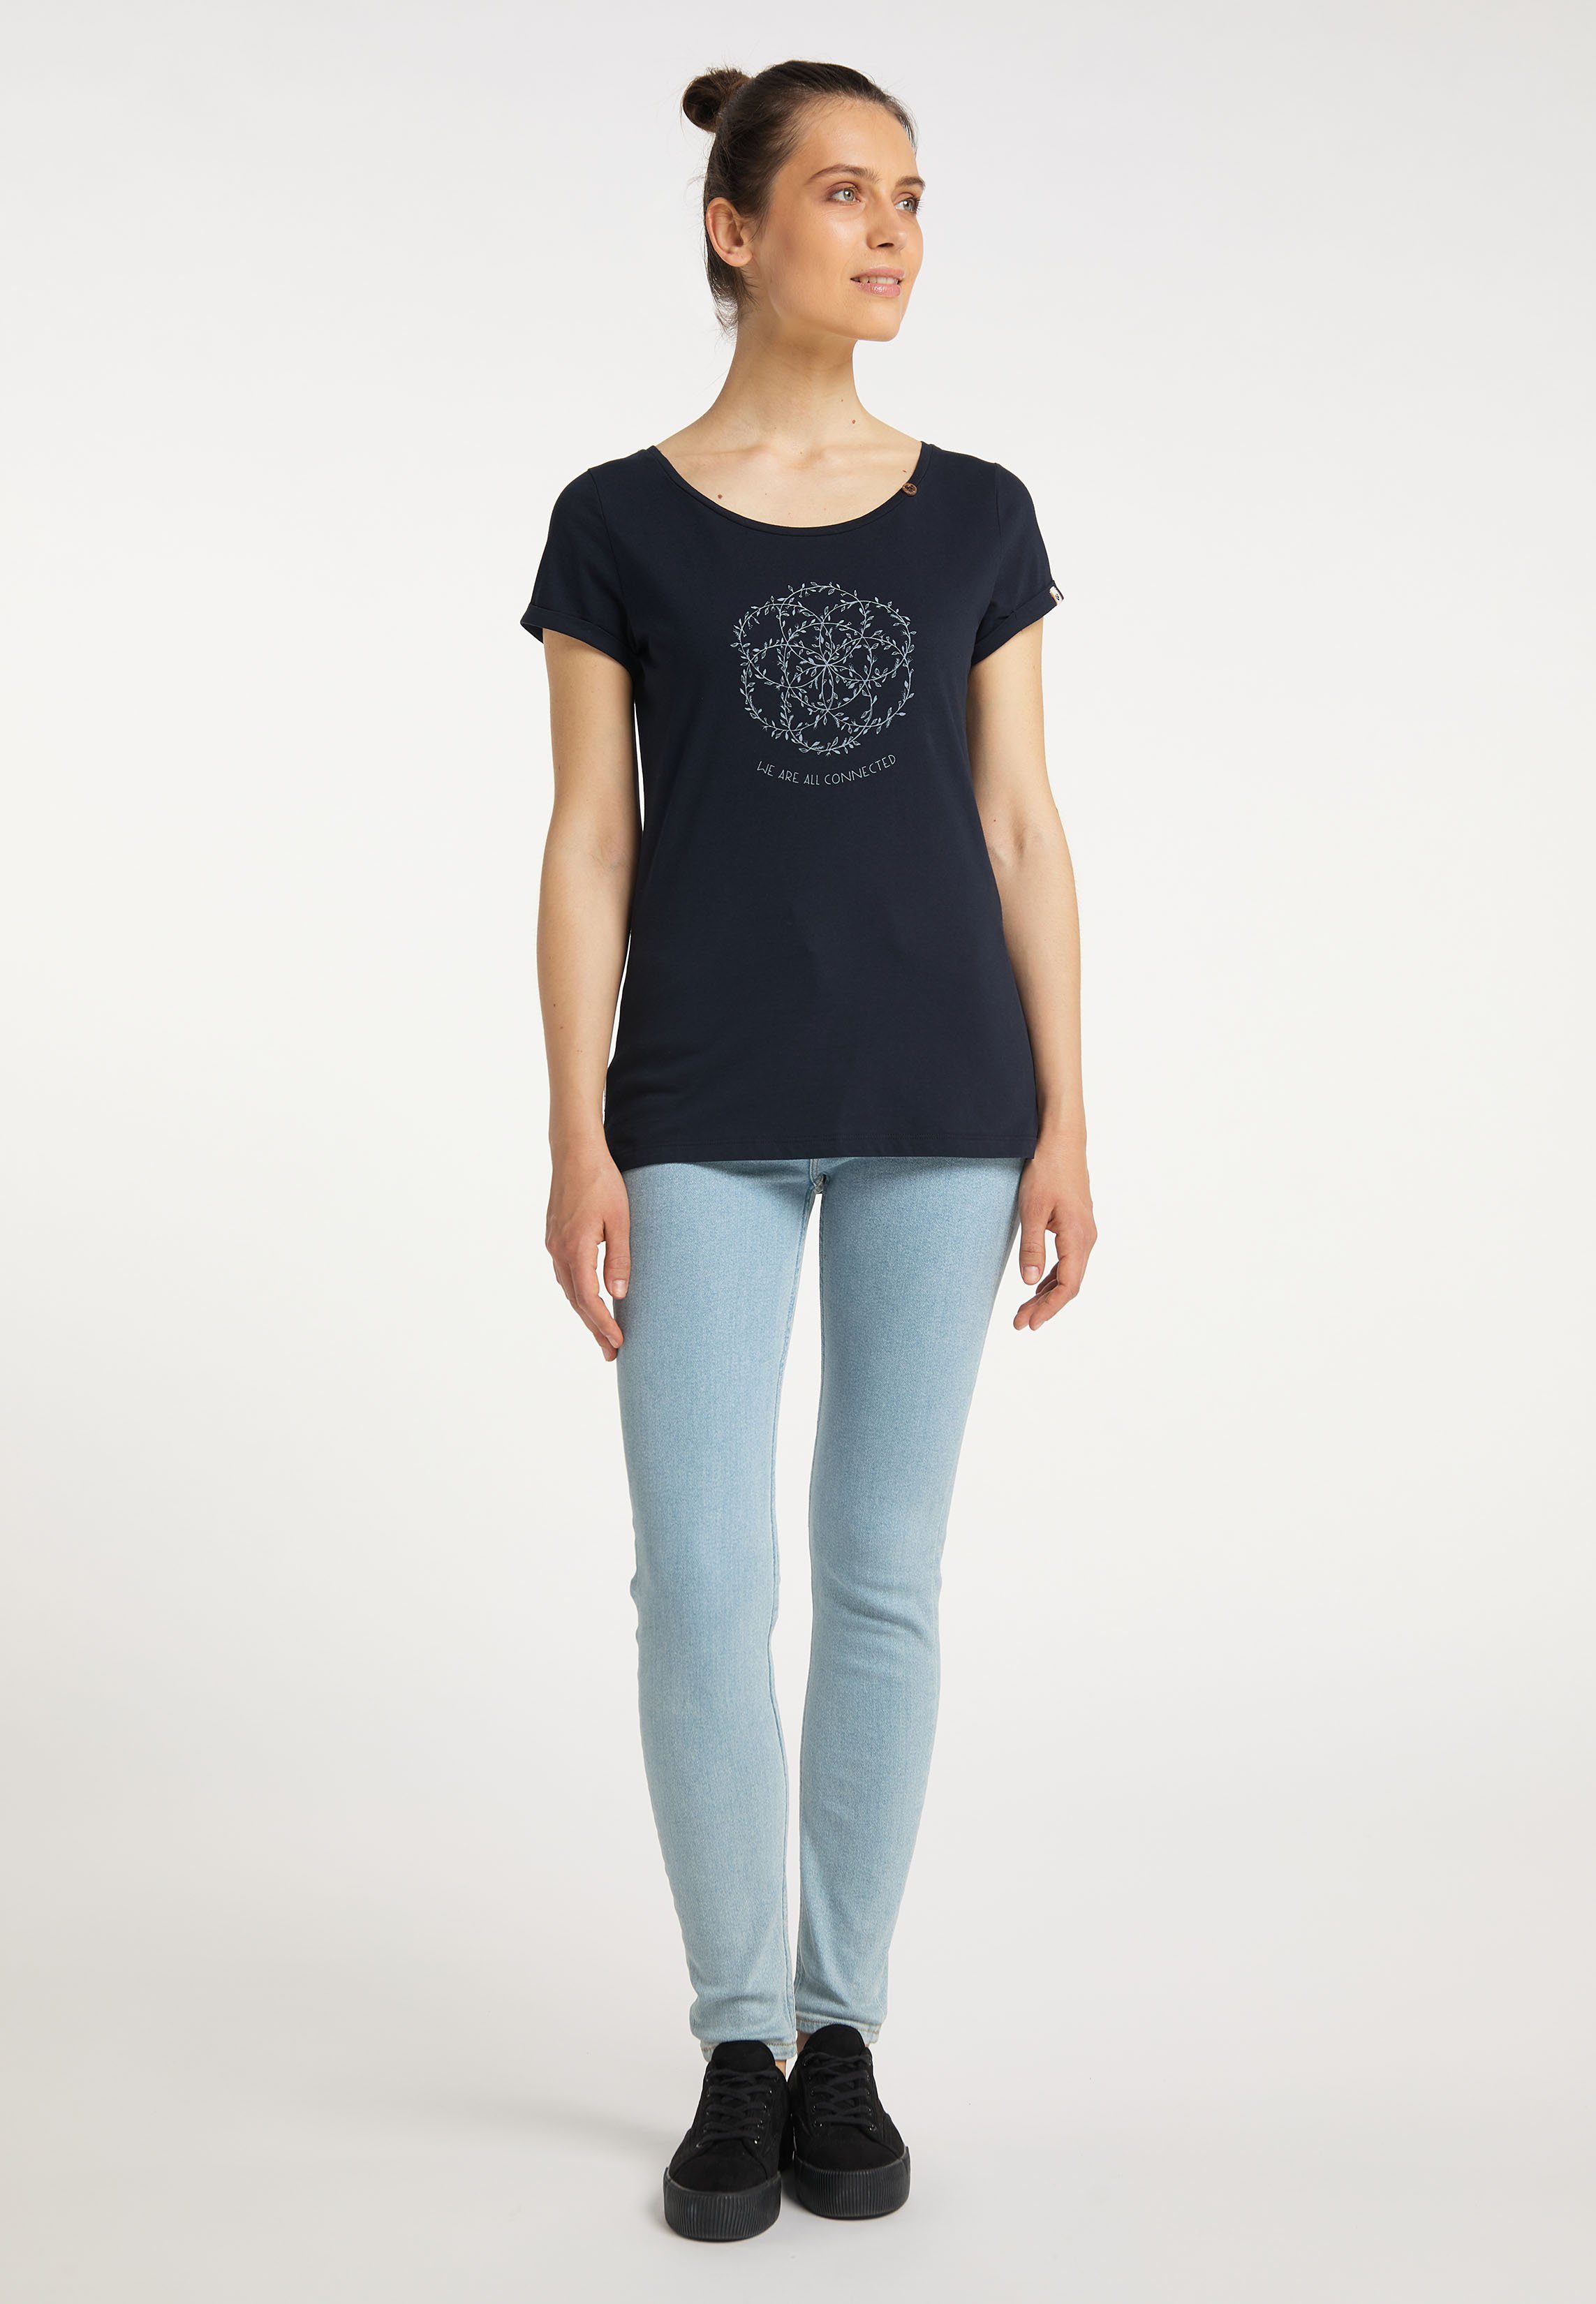 & ORGANIC UNI T-Shirt A Nachhaltige NAVY Vegane FLORAH Ragwear Mode PRINT